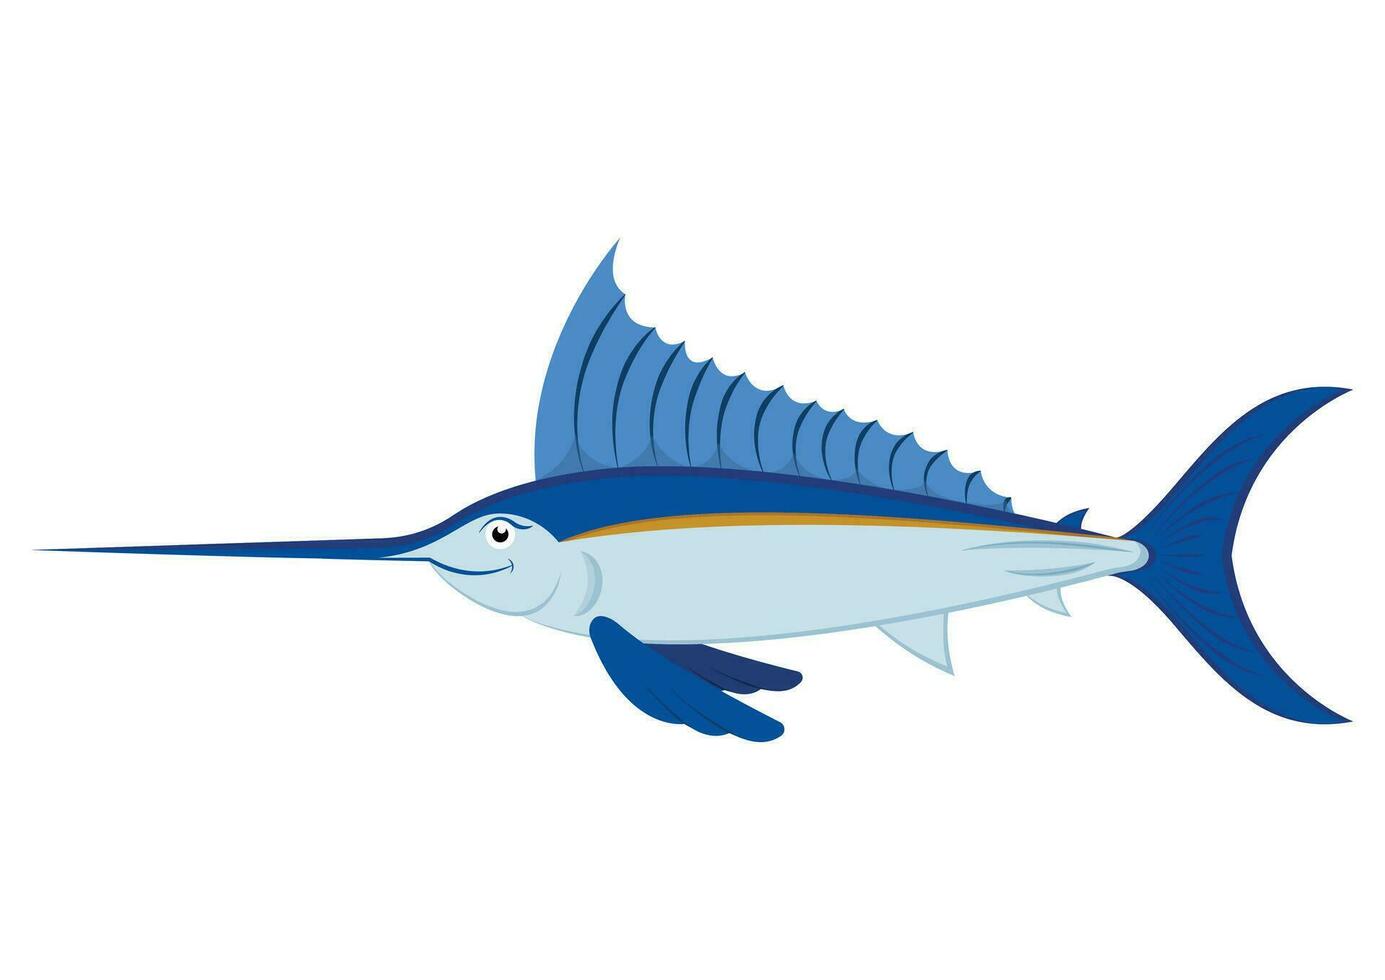 Ocean swordfish cartoon character vector isolated on white background